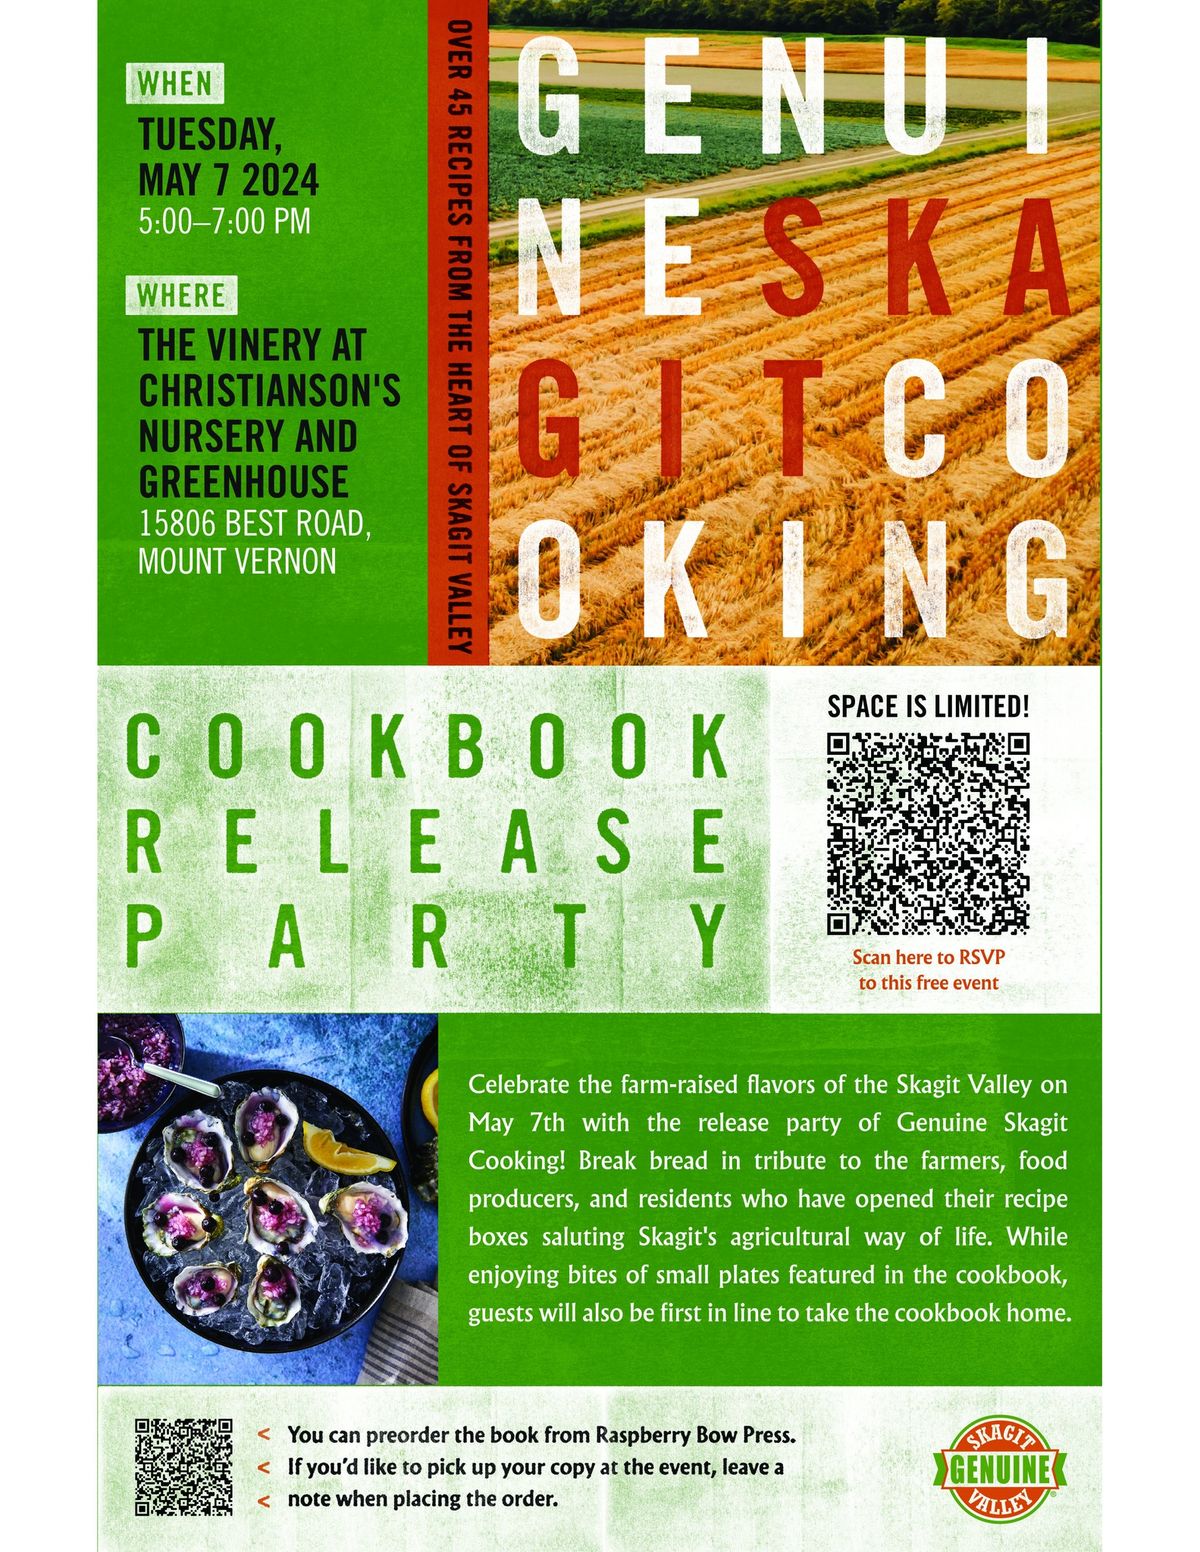 Genuine Skagit Cooking - Cookbook Release Party